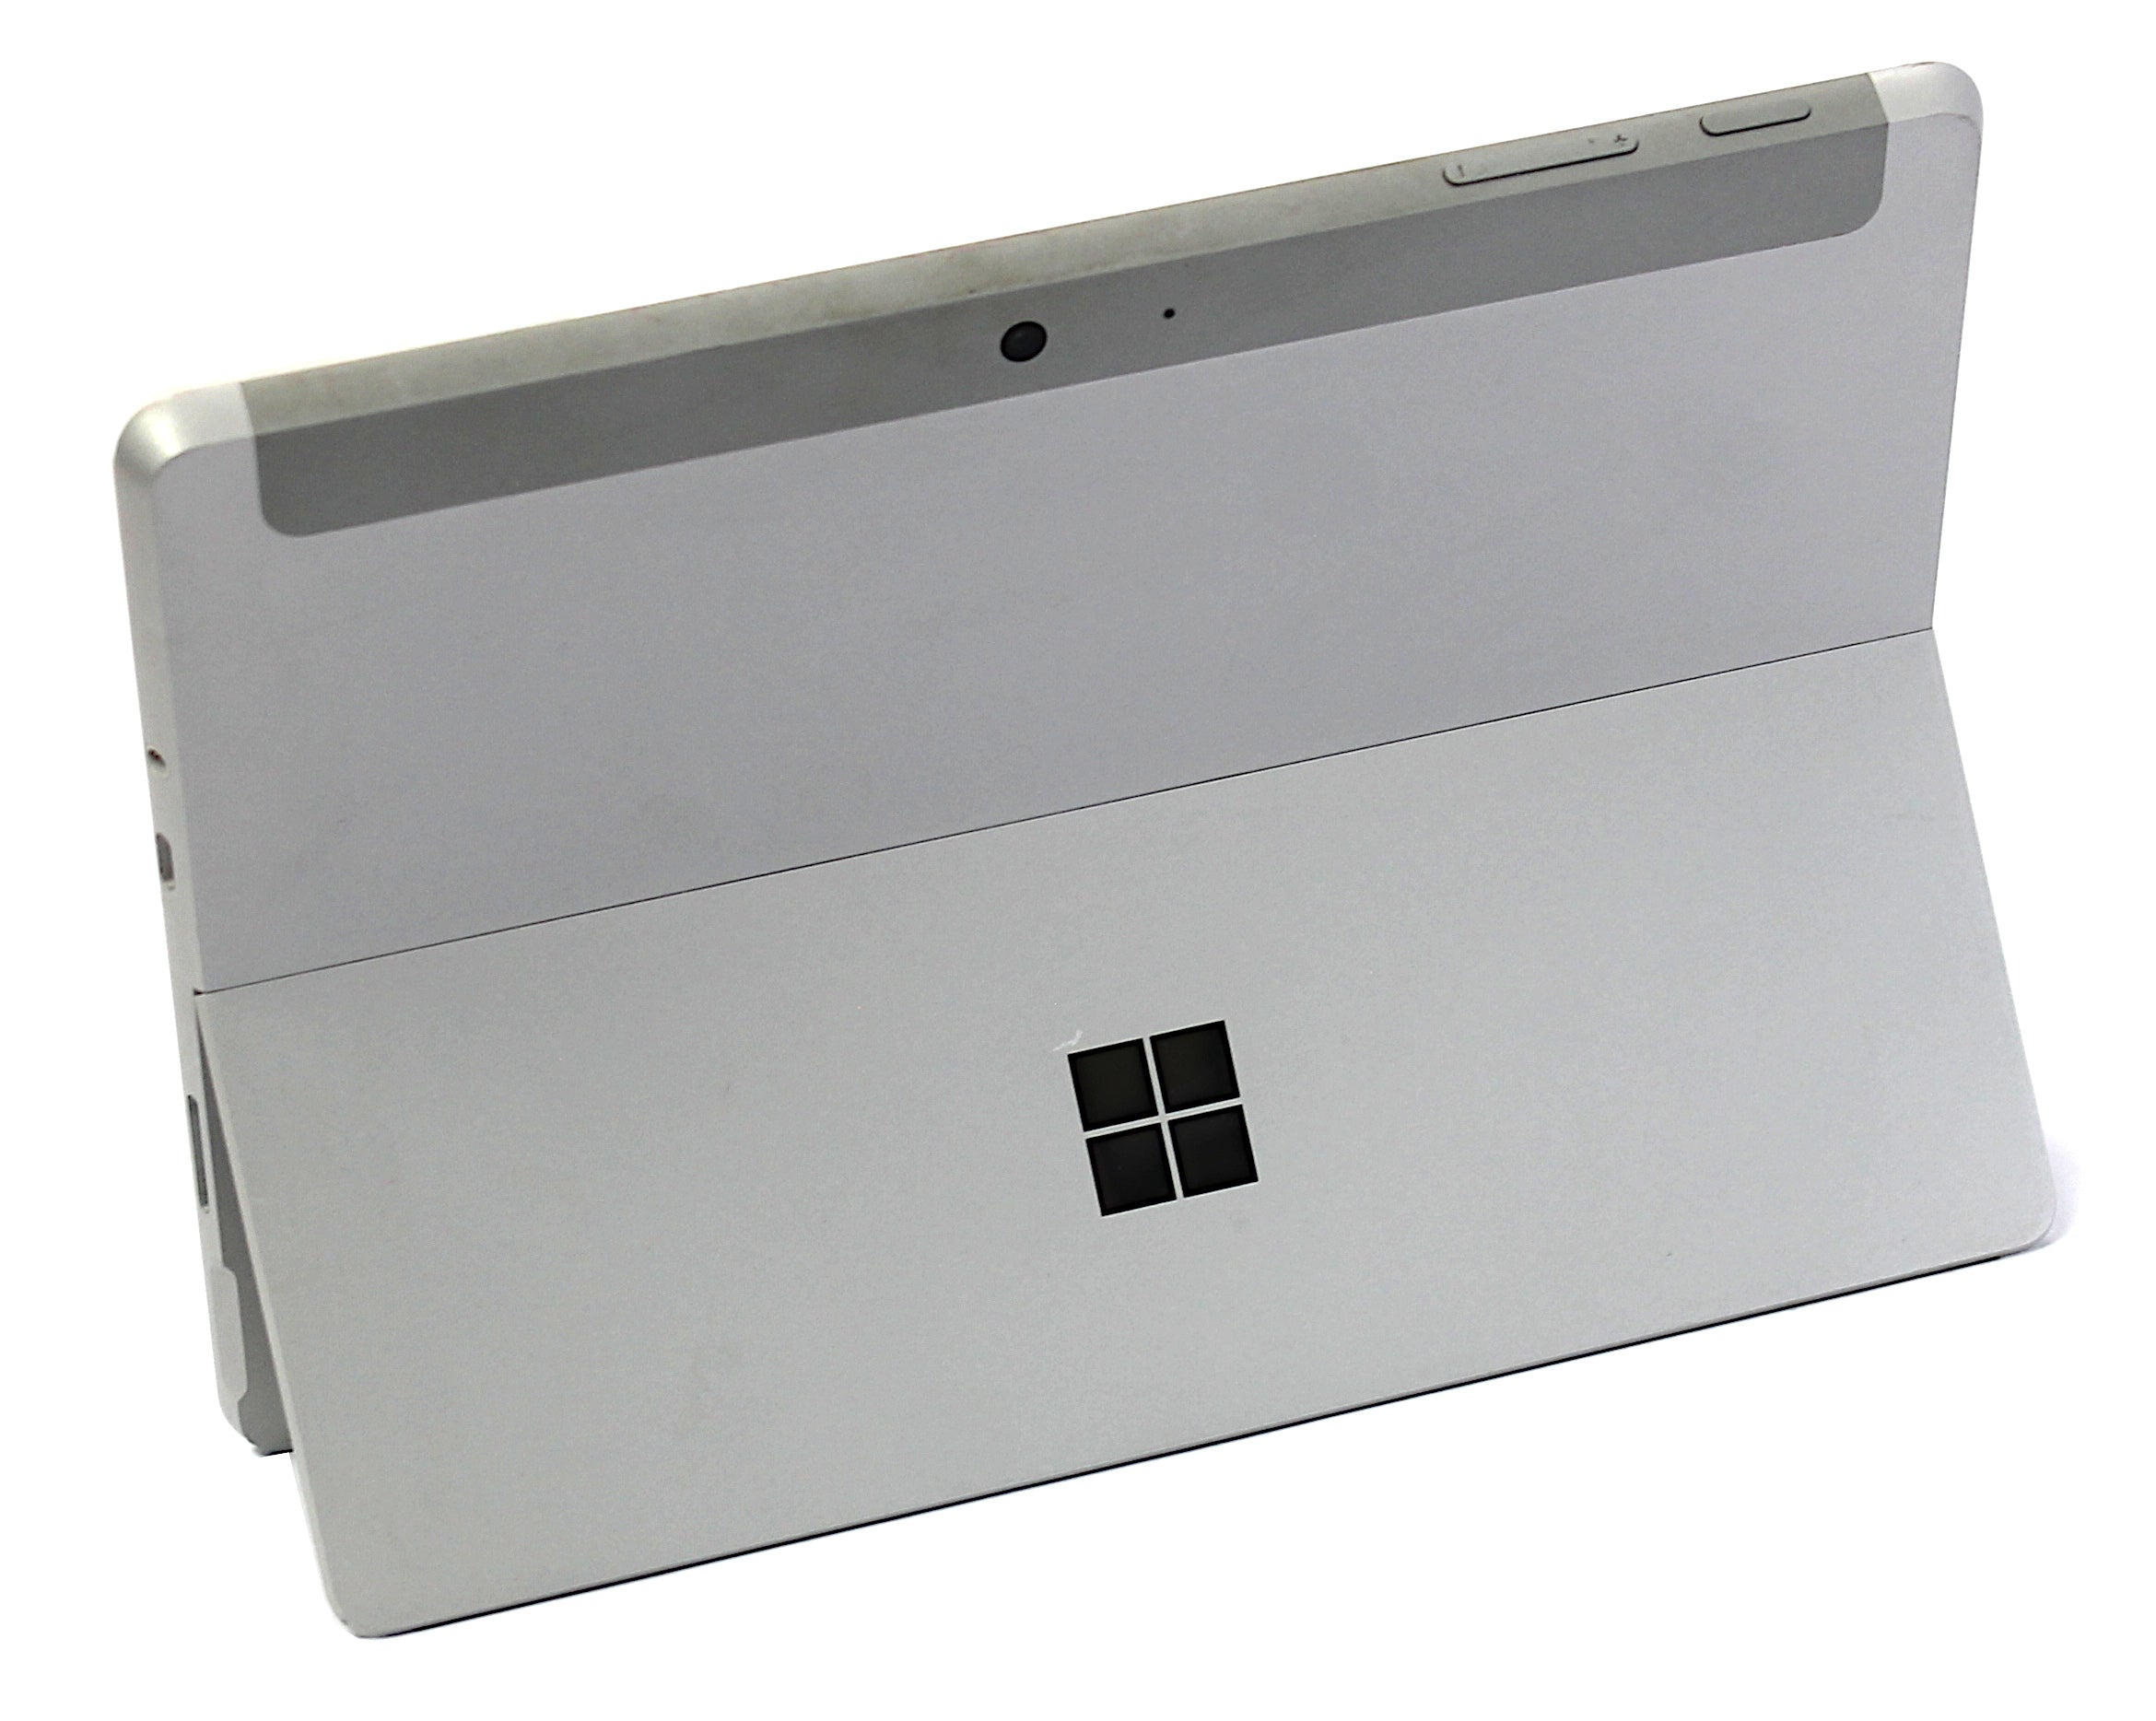 Microsoft Surface Go , Intel Pentium, 8GB RAM, 128GB eMMC, 1824